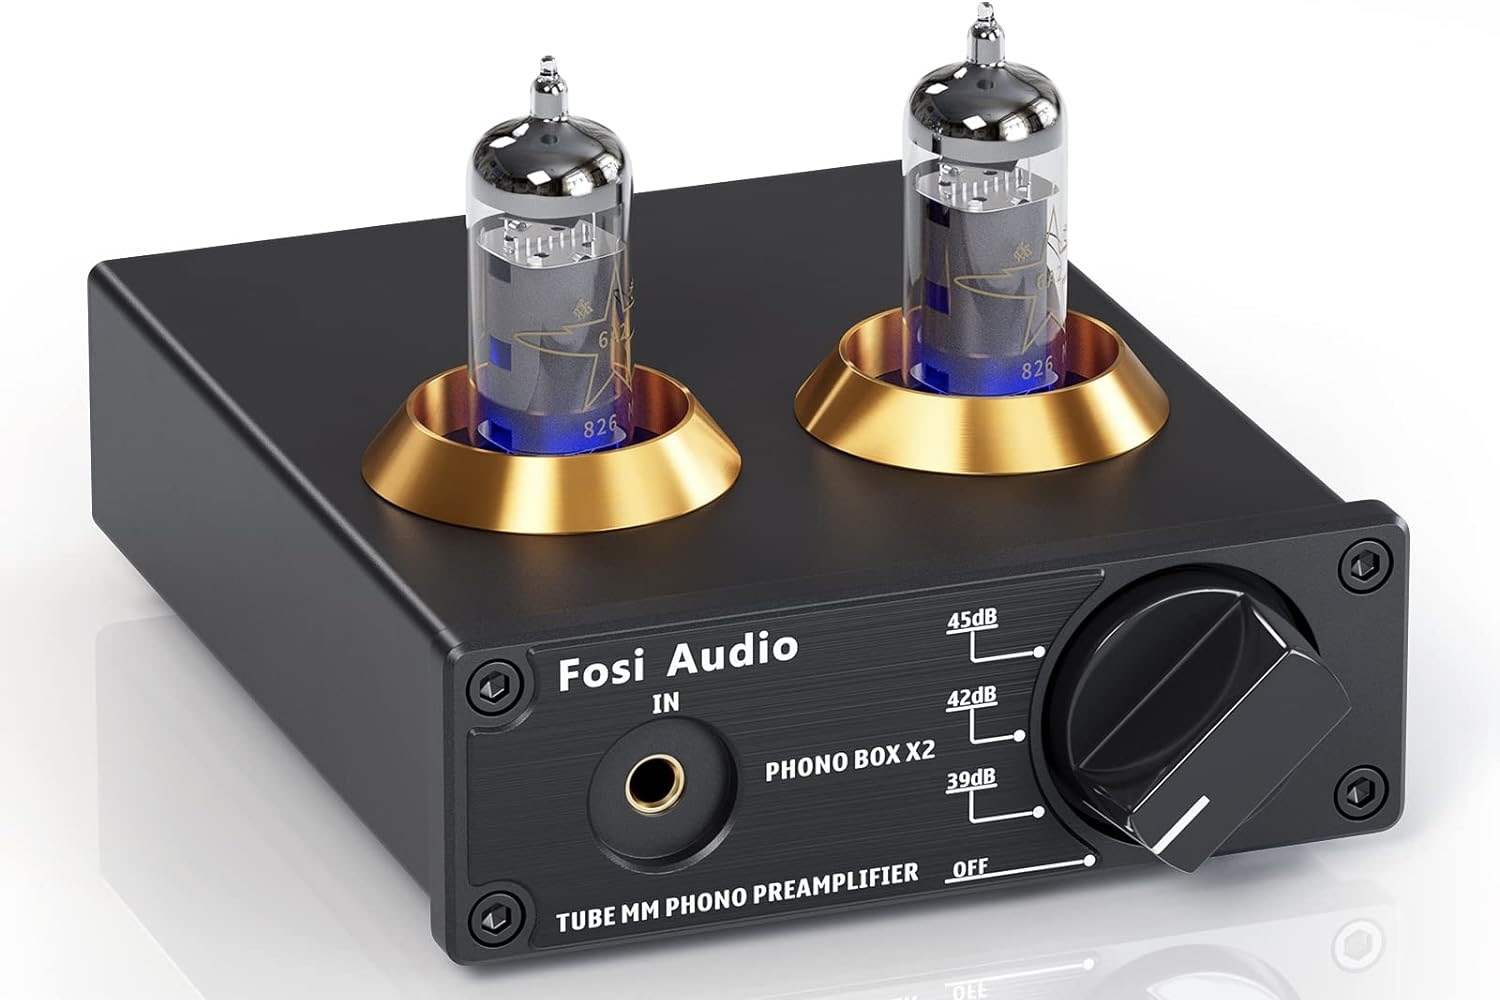 The Fosi Audio Box X2 phono preamp.